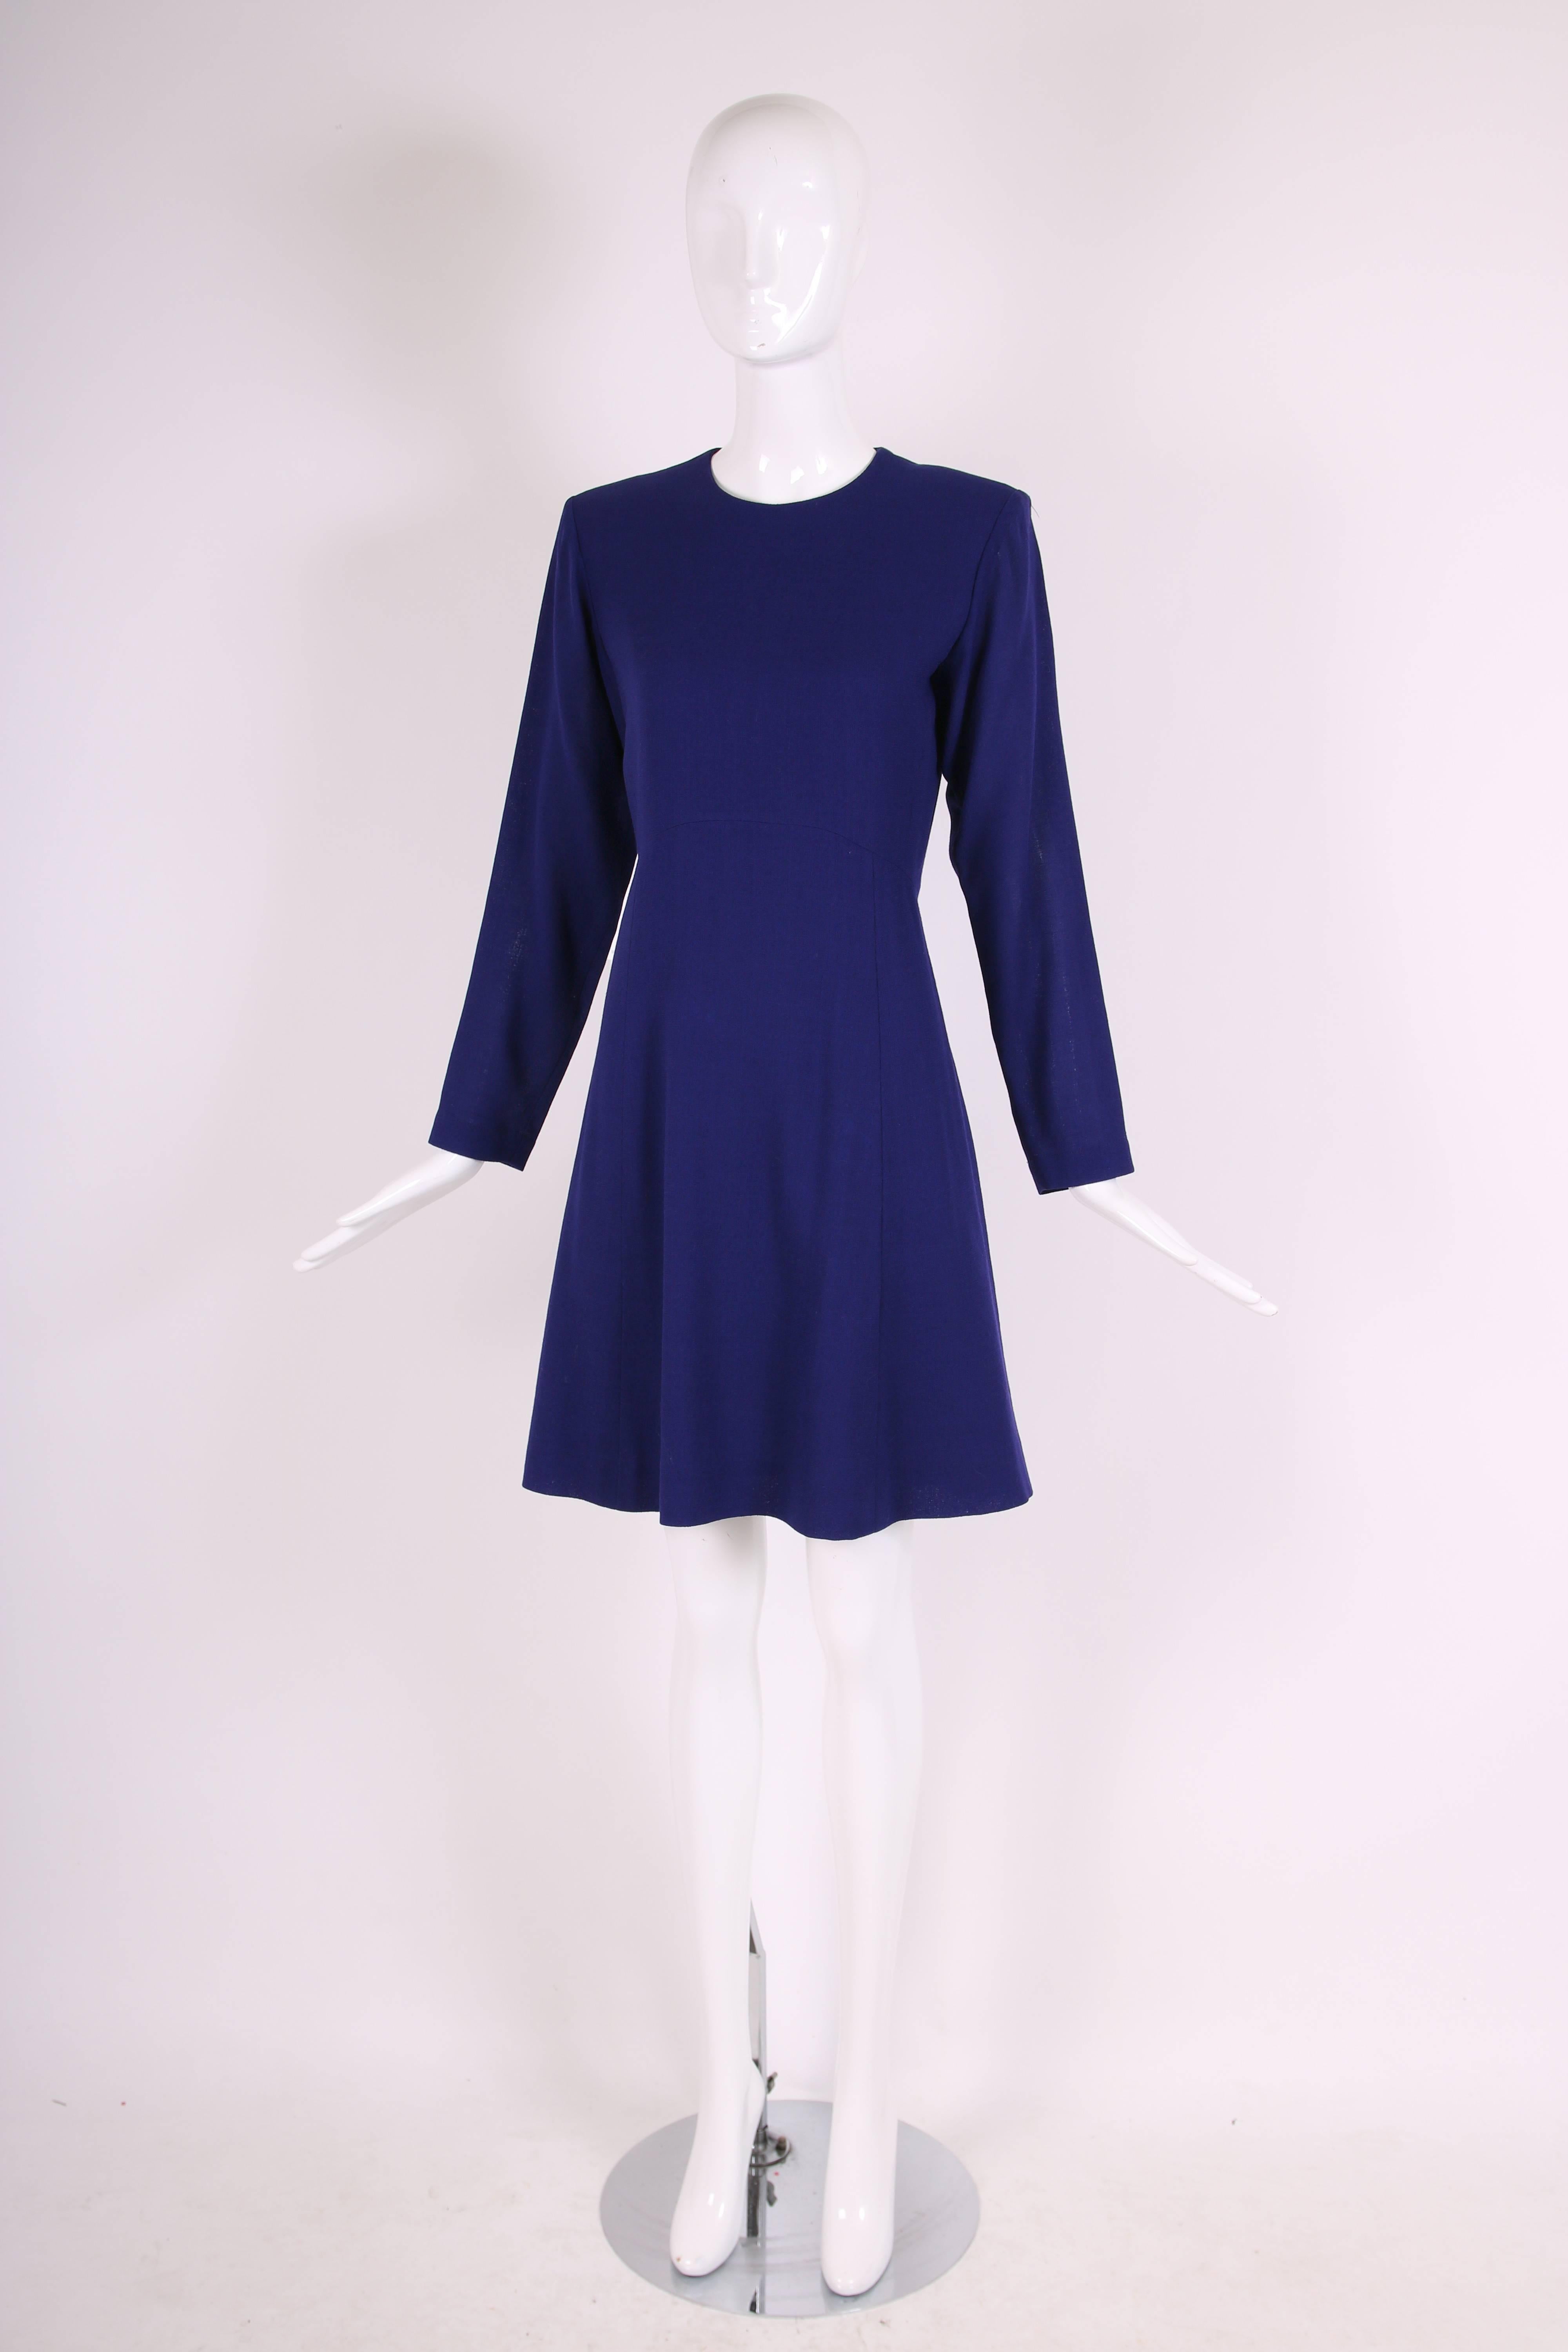 purple knee length dress